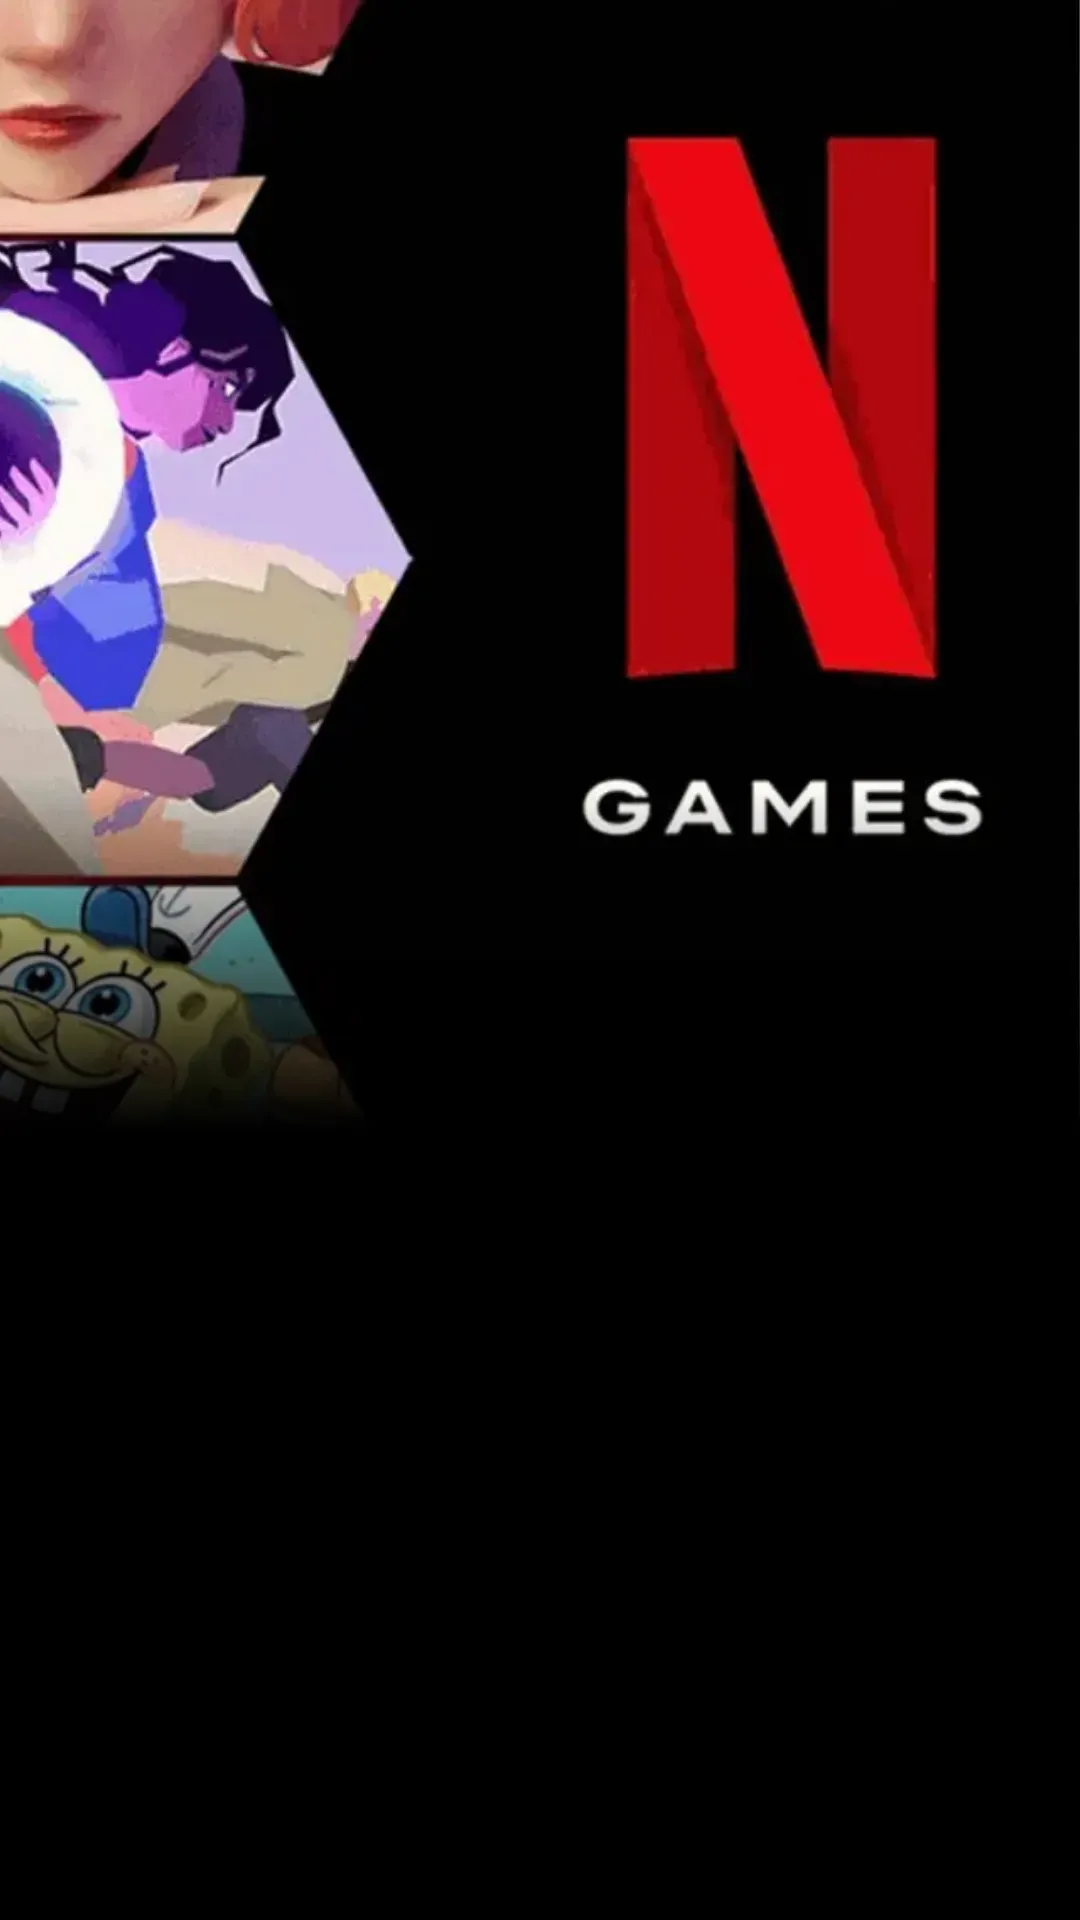 GTA Trilogy Grátis com a Netflix